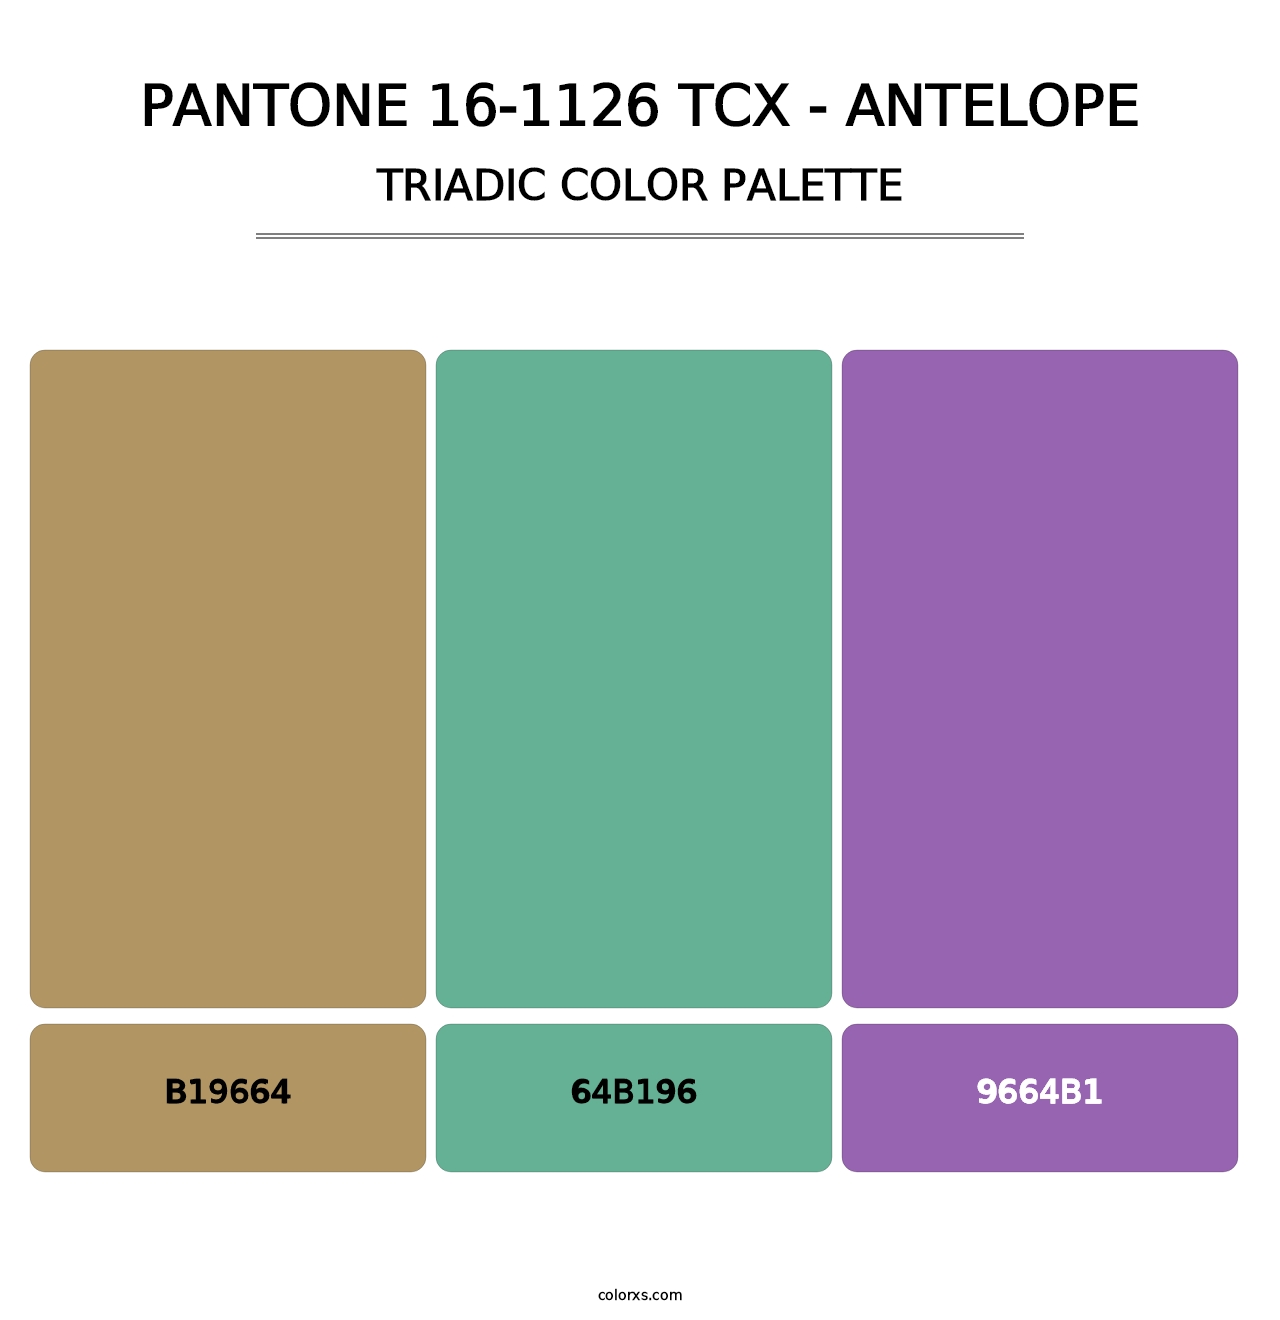 PANTONE 16-1126 TCX - Antelope - Triadic Color Palette